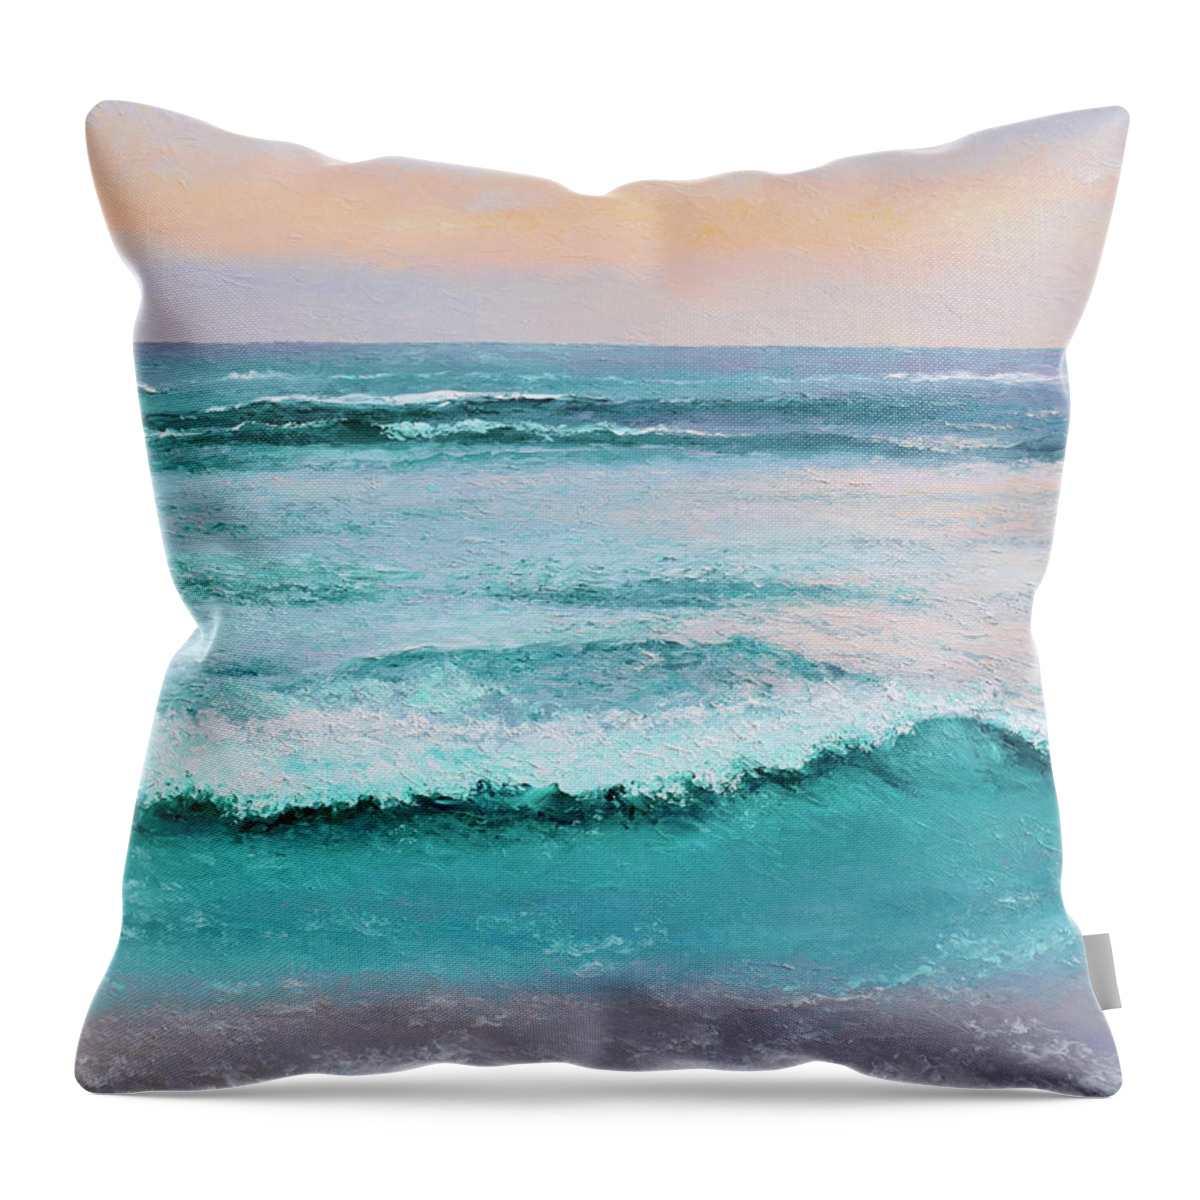 Ocean Throw Pillow featuring the painting A sense of calm, seascape by Jan Matson